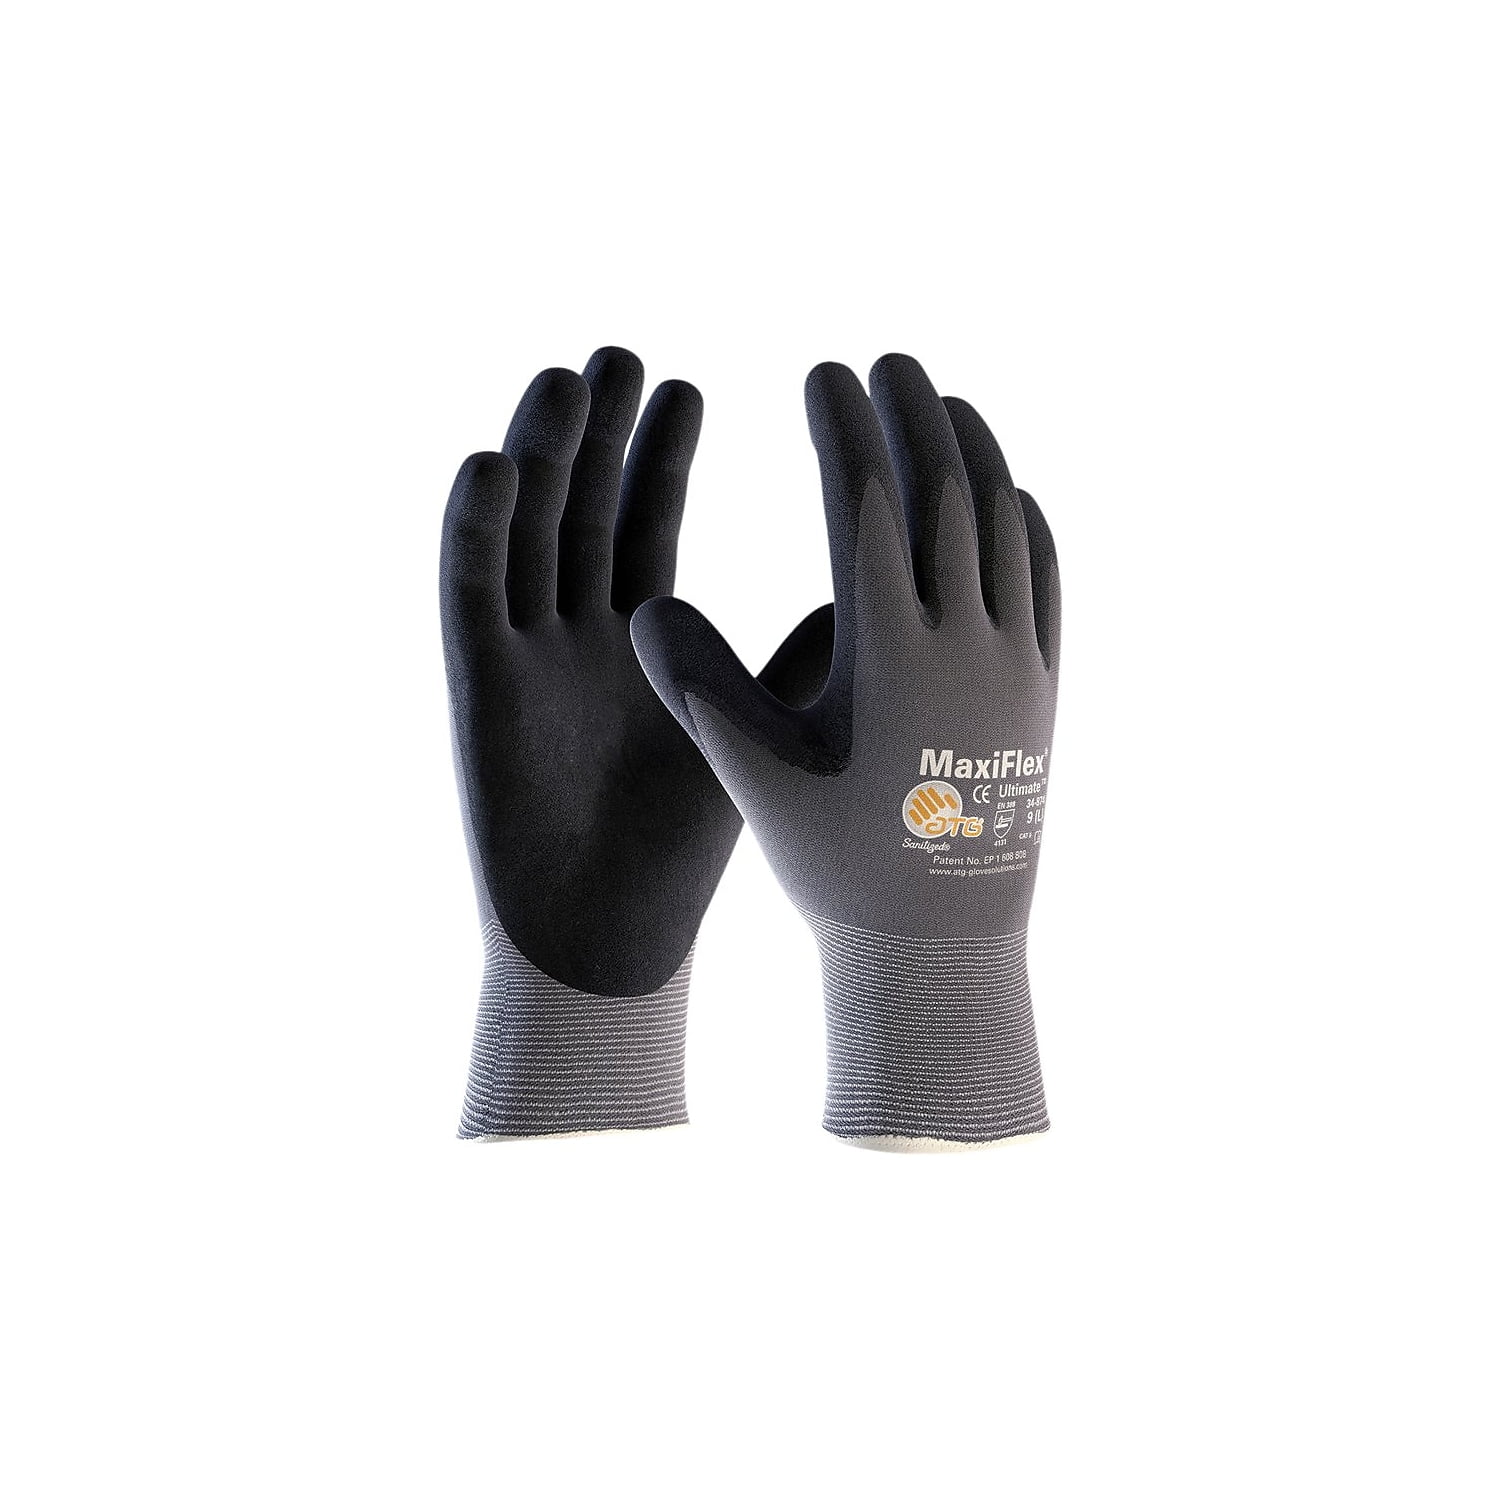 maxiflex ultimate gloves Size 10 XL 